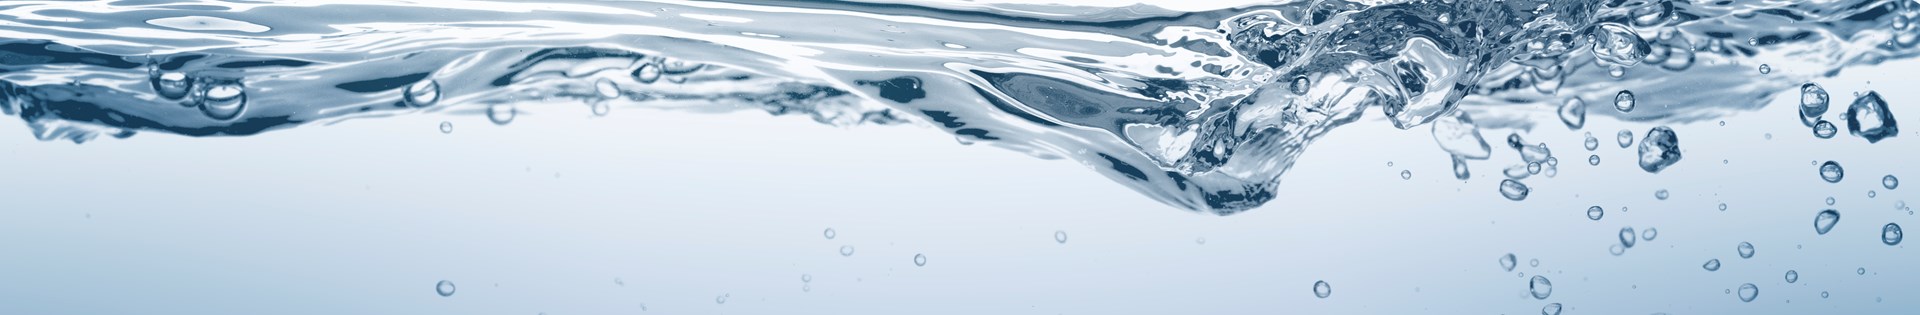 Fresh Water Texture Background Transparent Liquid